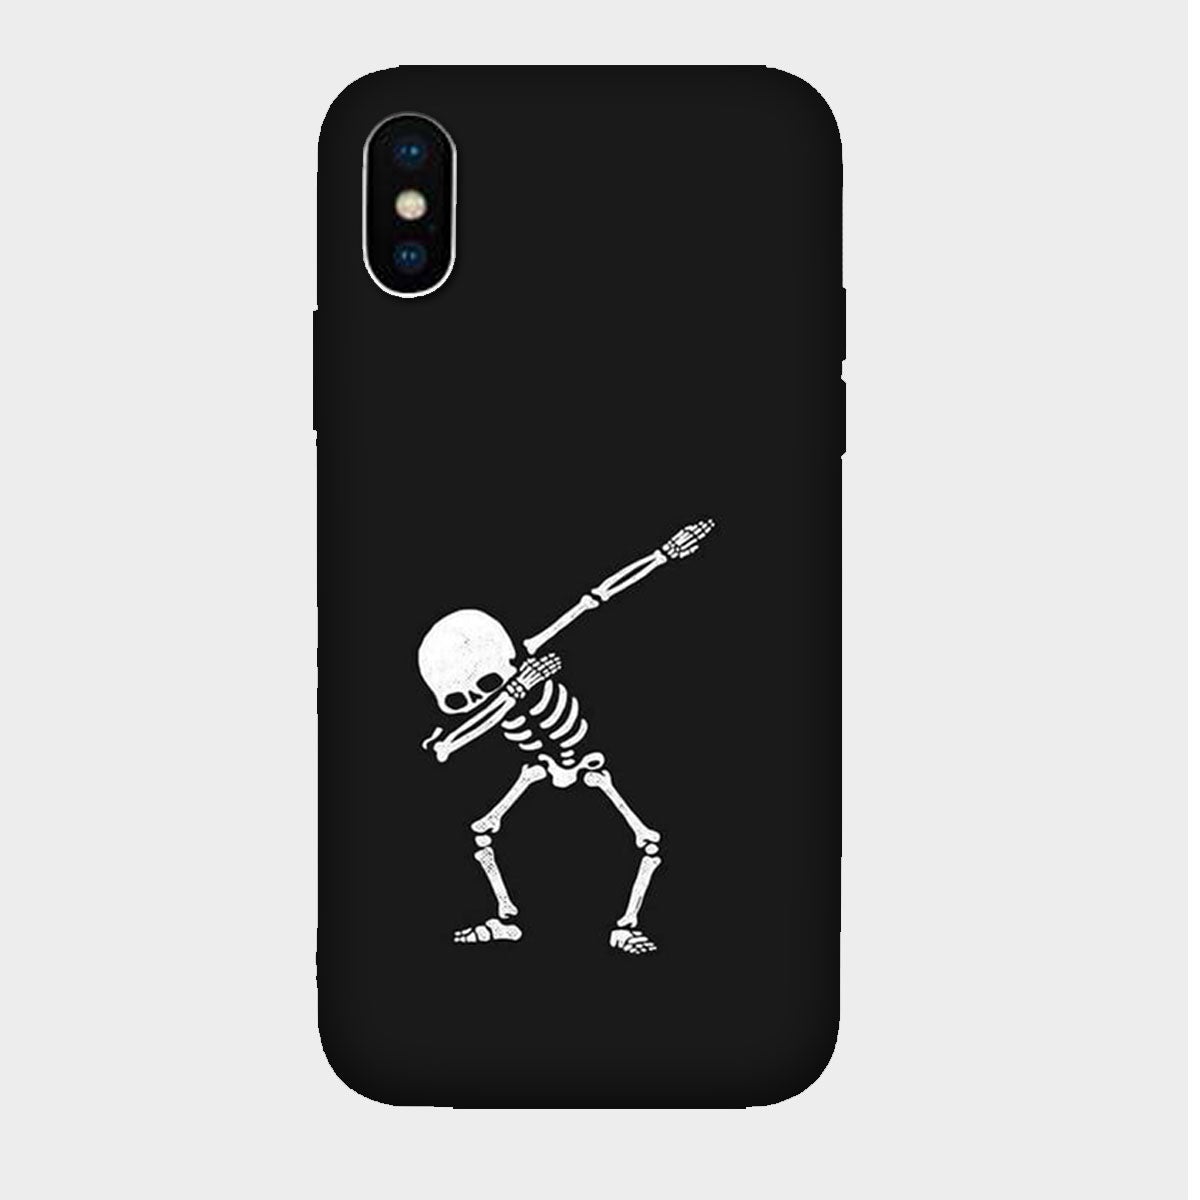 Skull Dab - Mobile Phone Cover - Hard Case